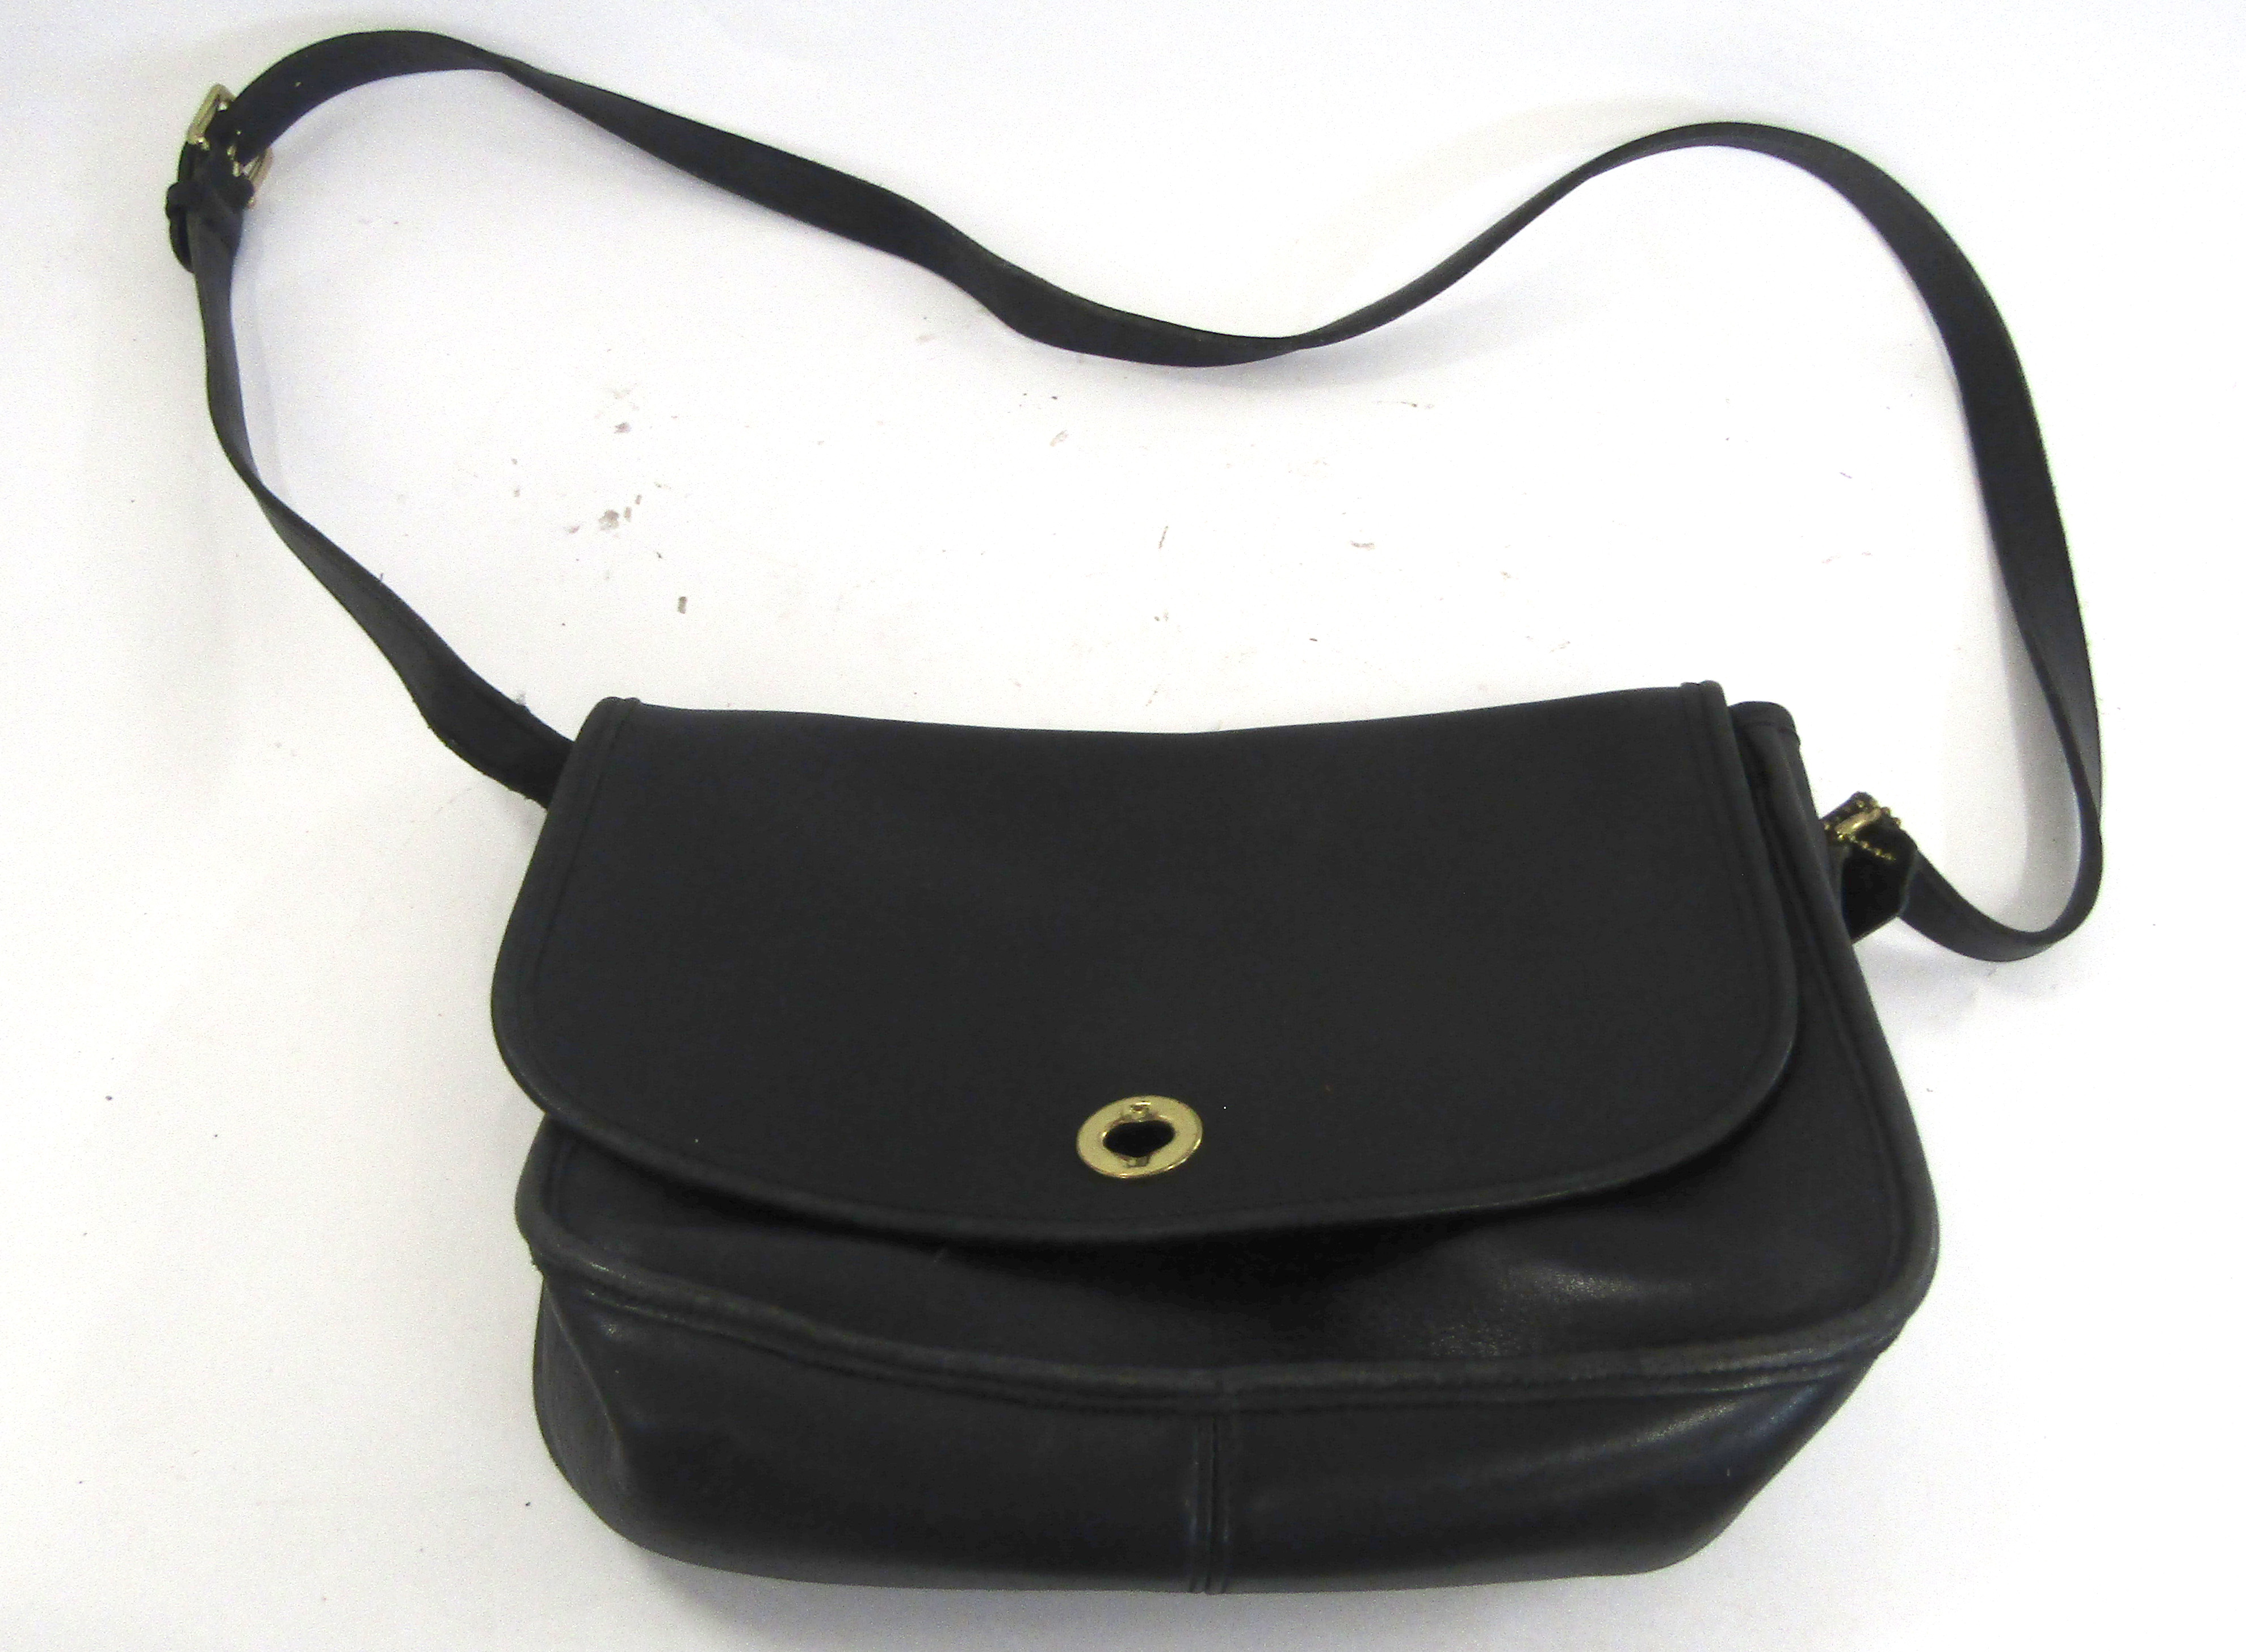 Ladies black patent leather handbag by Coach, ref no J10-9790